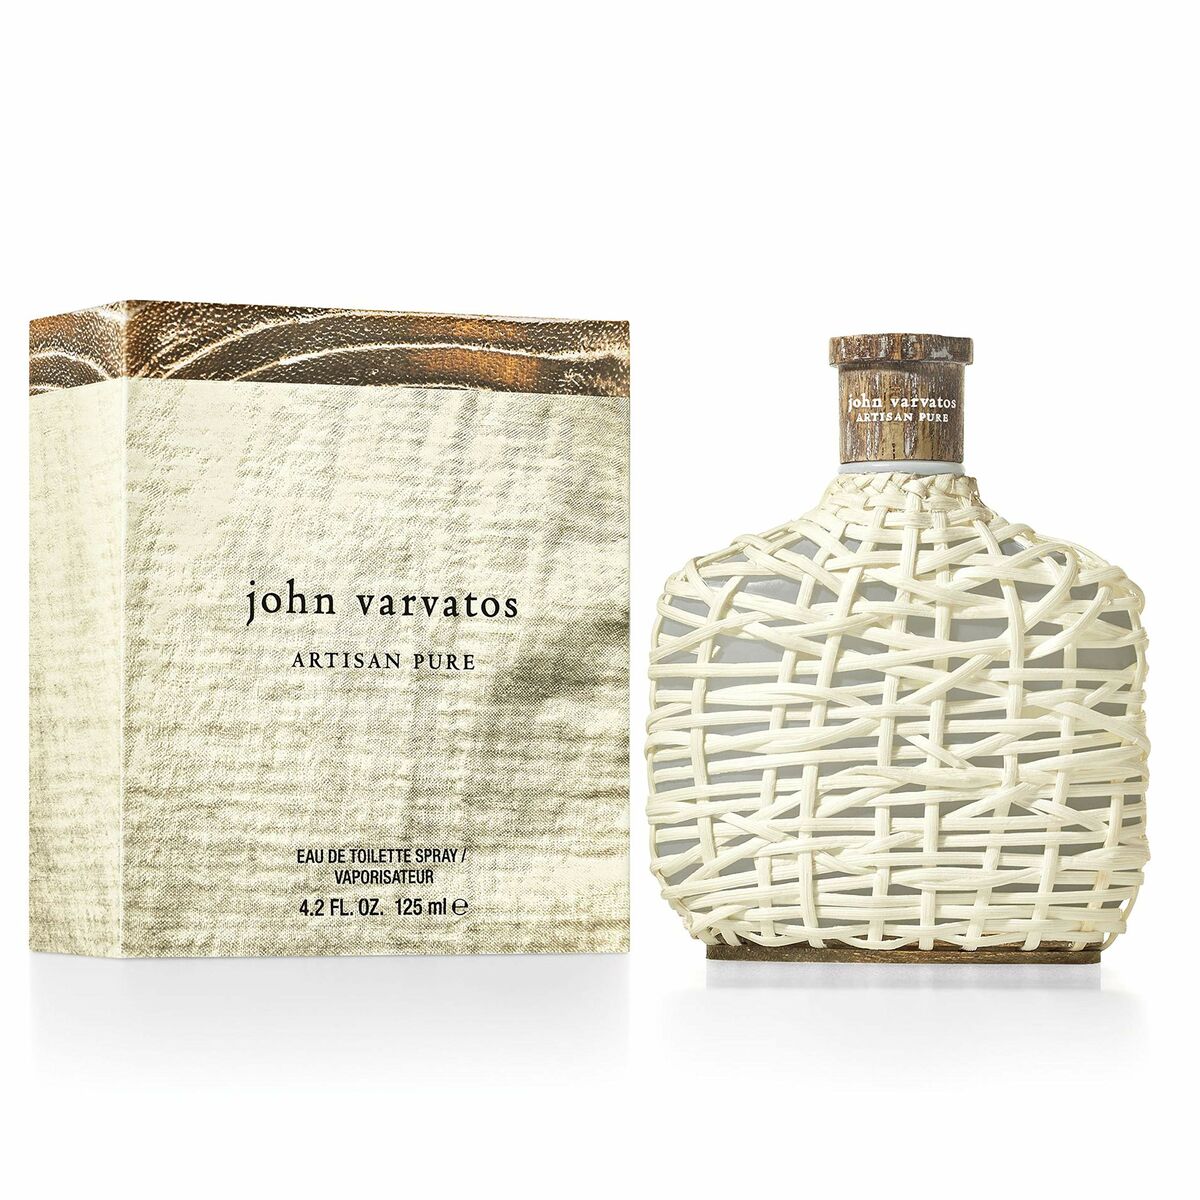 Parfum Homme John Varvatos EDT Artisan Pure (125 ml)